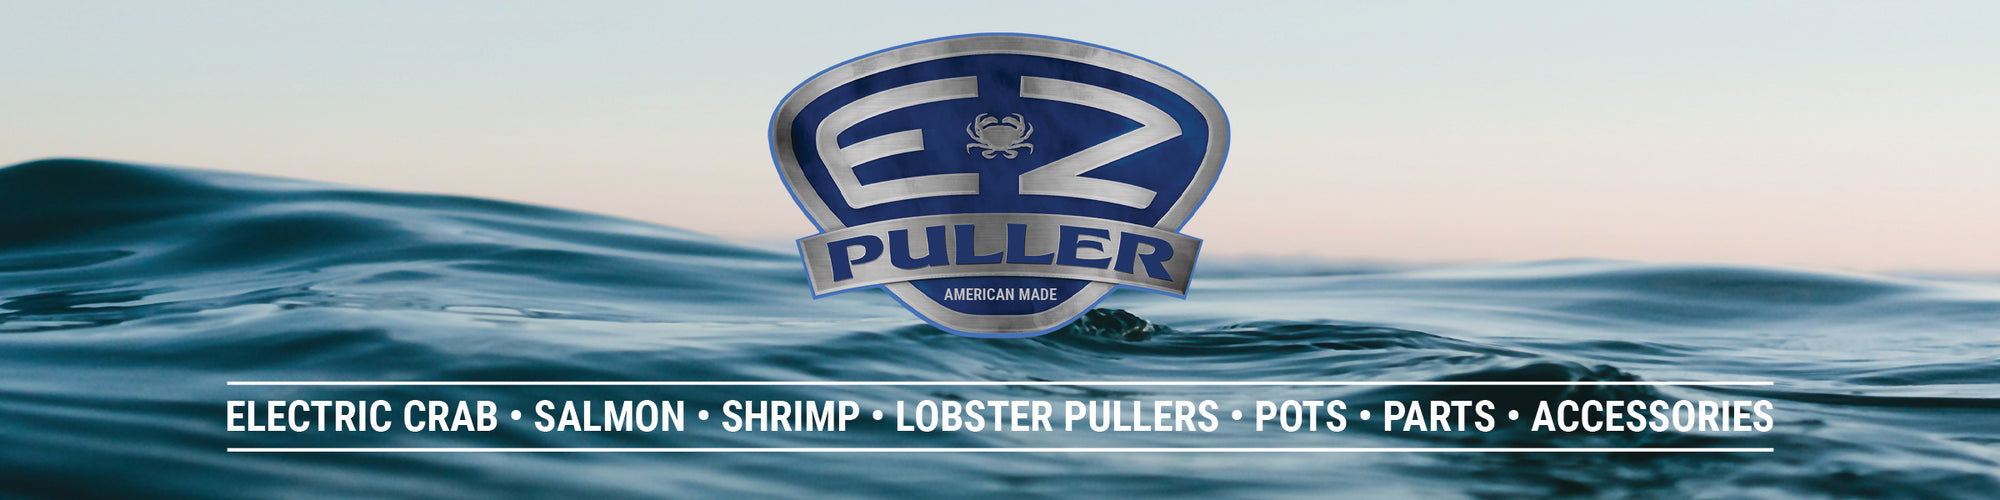 EZ Puller Logo floating above ocean water